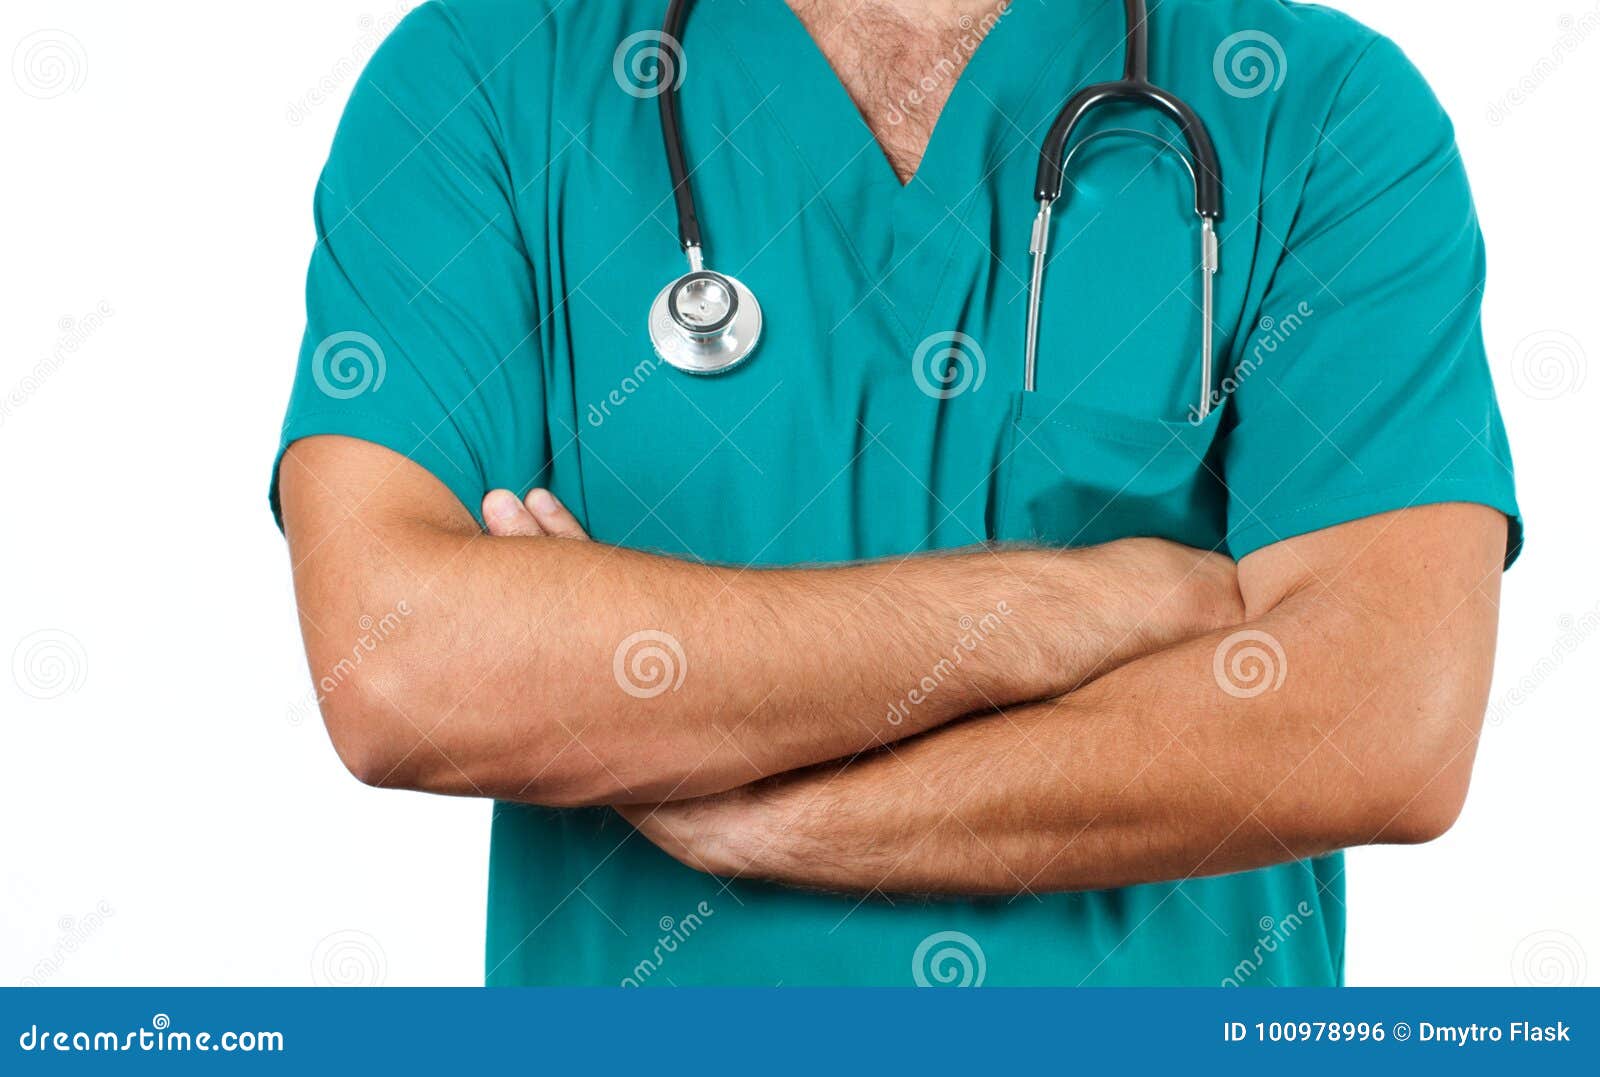 Вопрос врачу хирургу. Врач мужчина с фонендоскопом. Хирург мужчина. Парень врач хирург. Фото врачей хирургов мужчин.